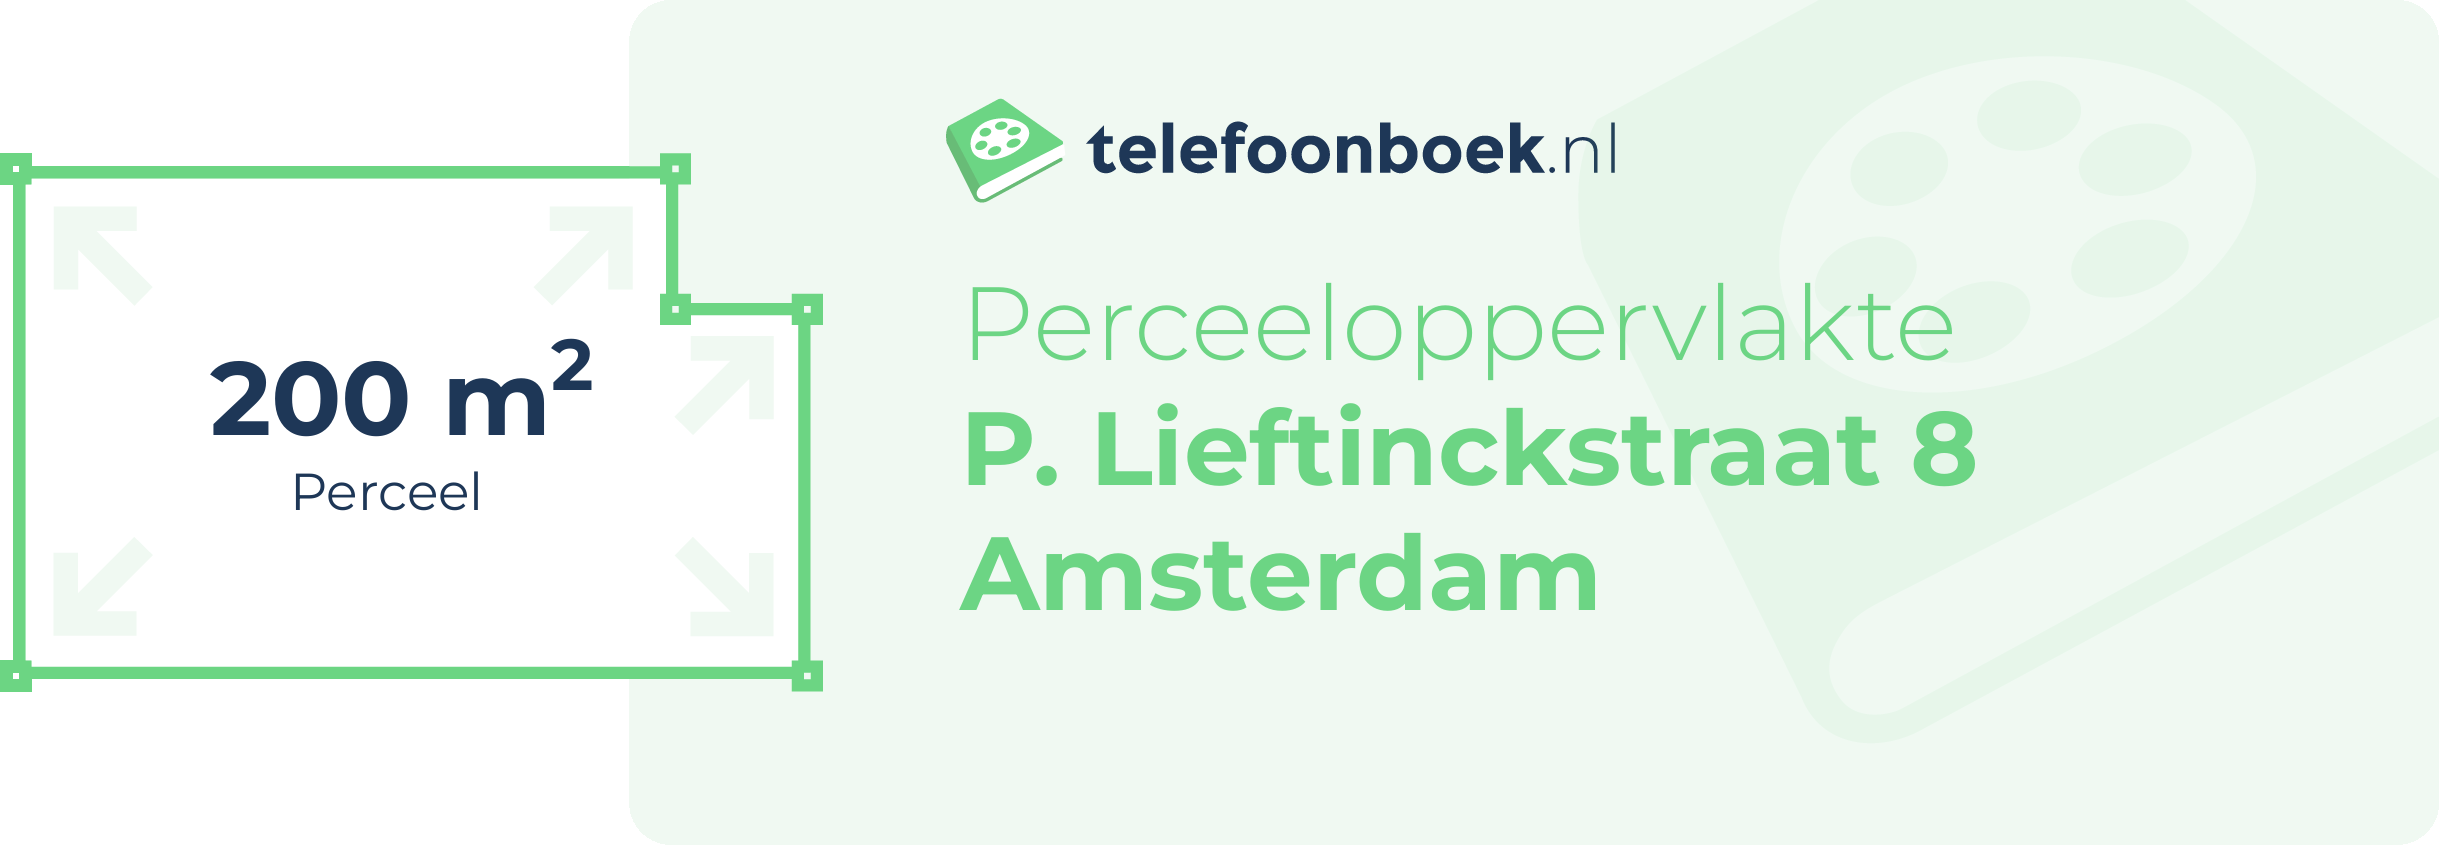 Perceeloppervlakte P. Lieftinckstraat 8 Amsterdam